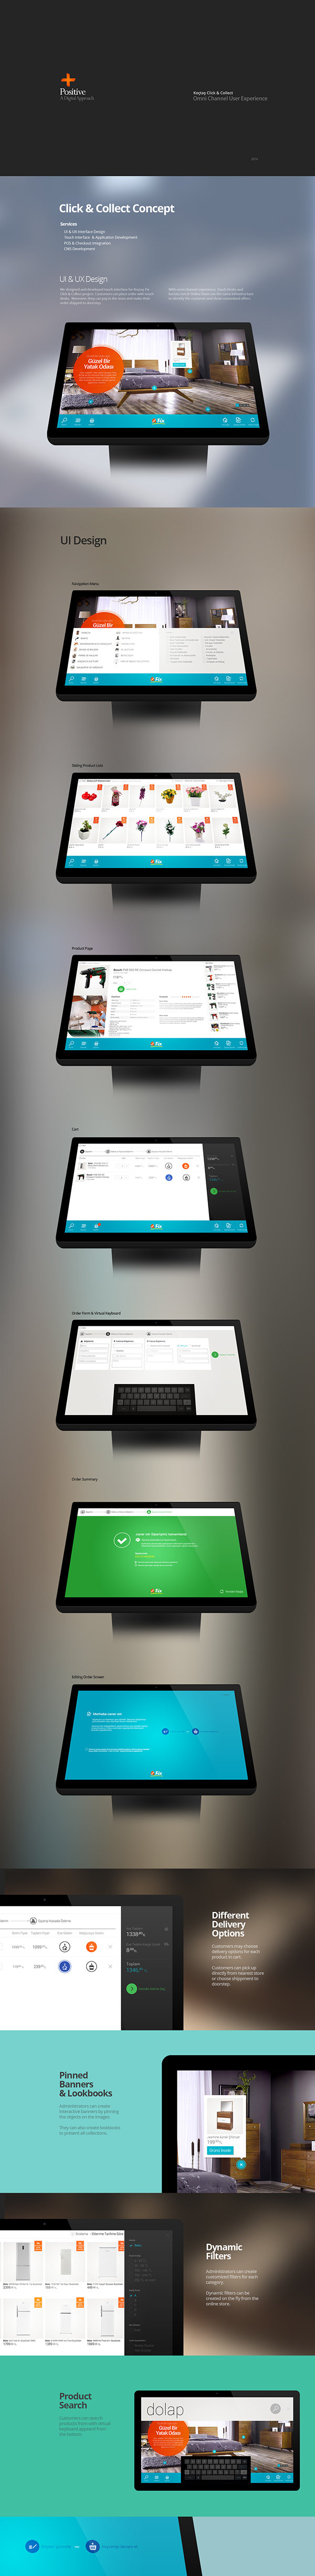 Koçtaş Click & Collect Omni Channel Touch-Desk